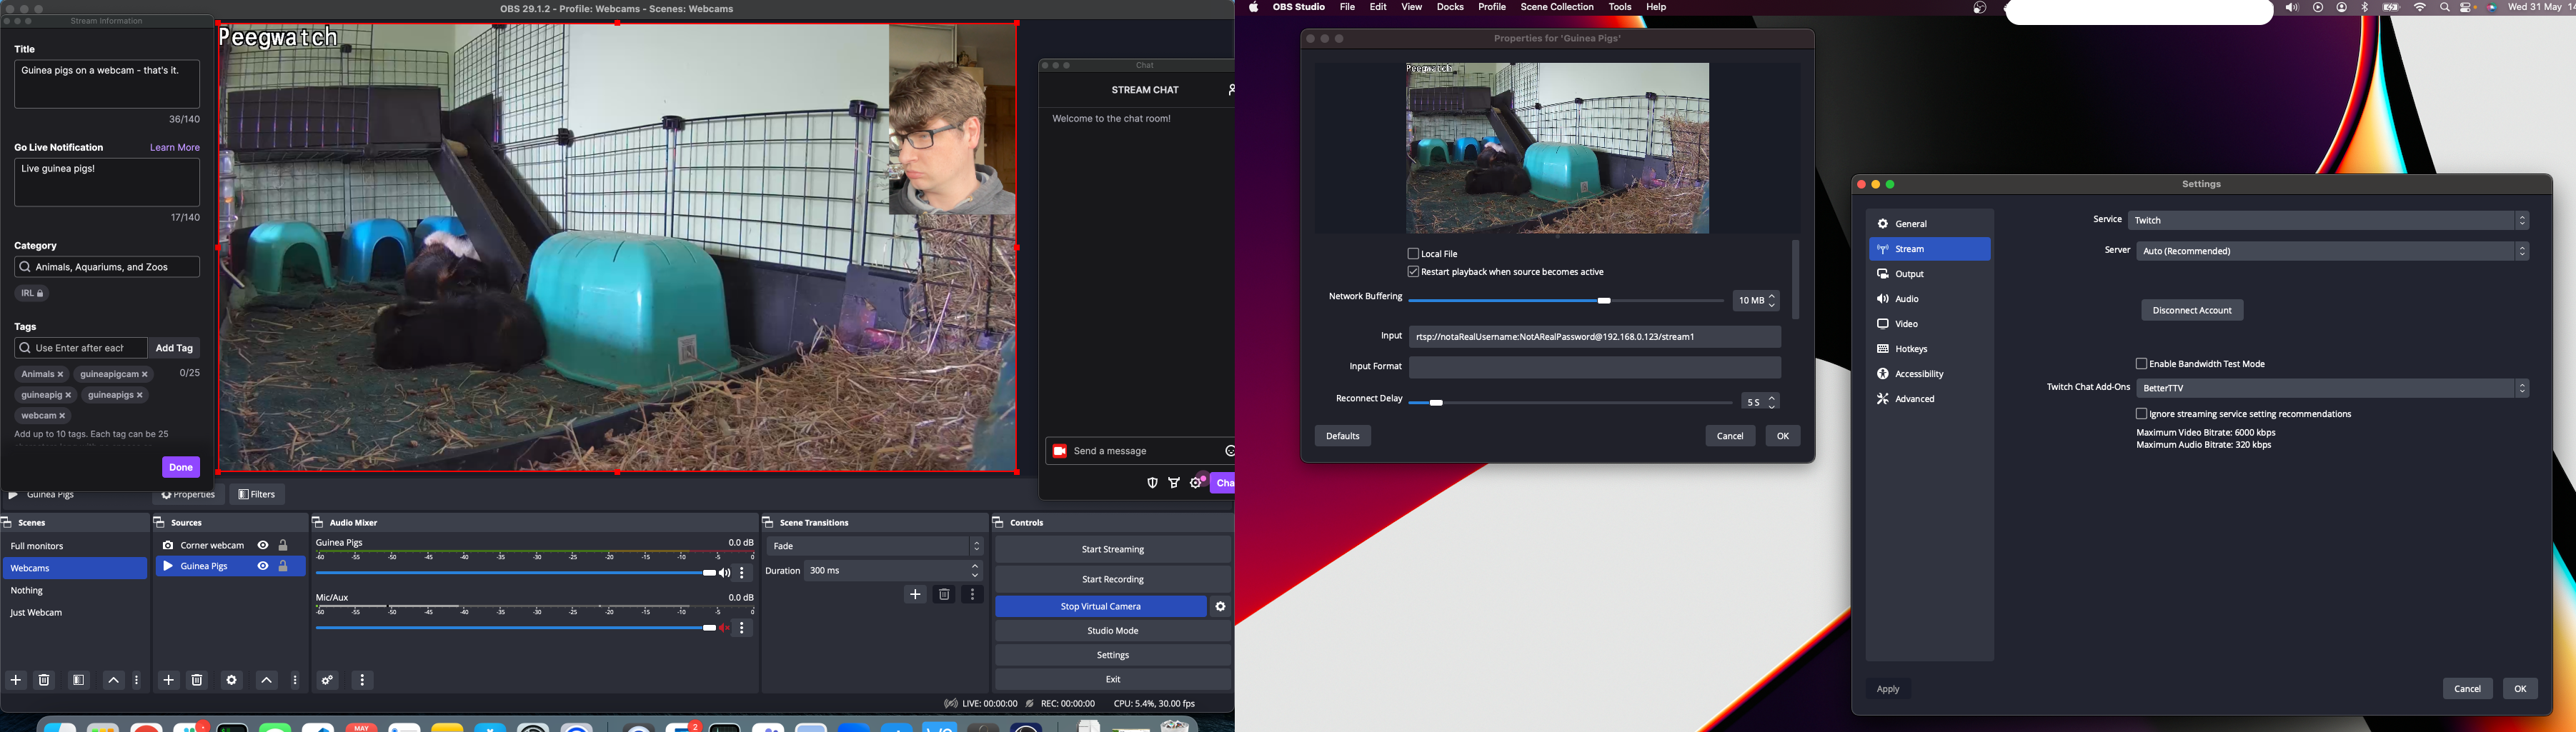 Stream webcam to Twitch via Raspberry Pi & Datarhei Restreamer